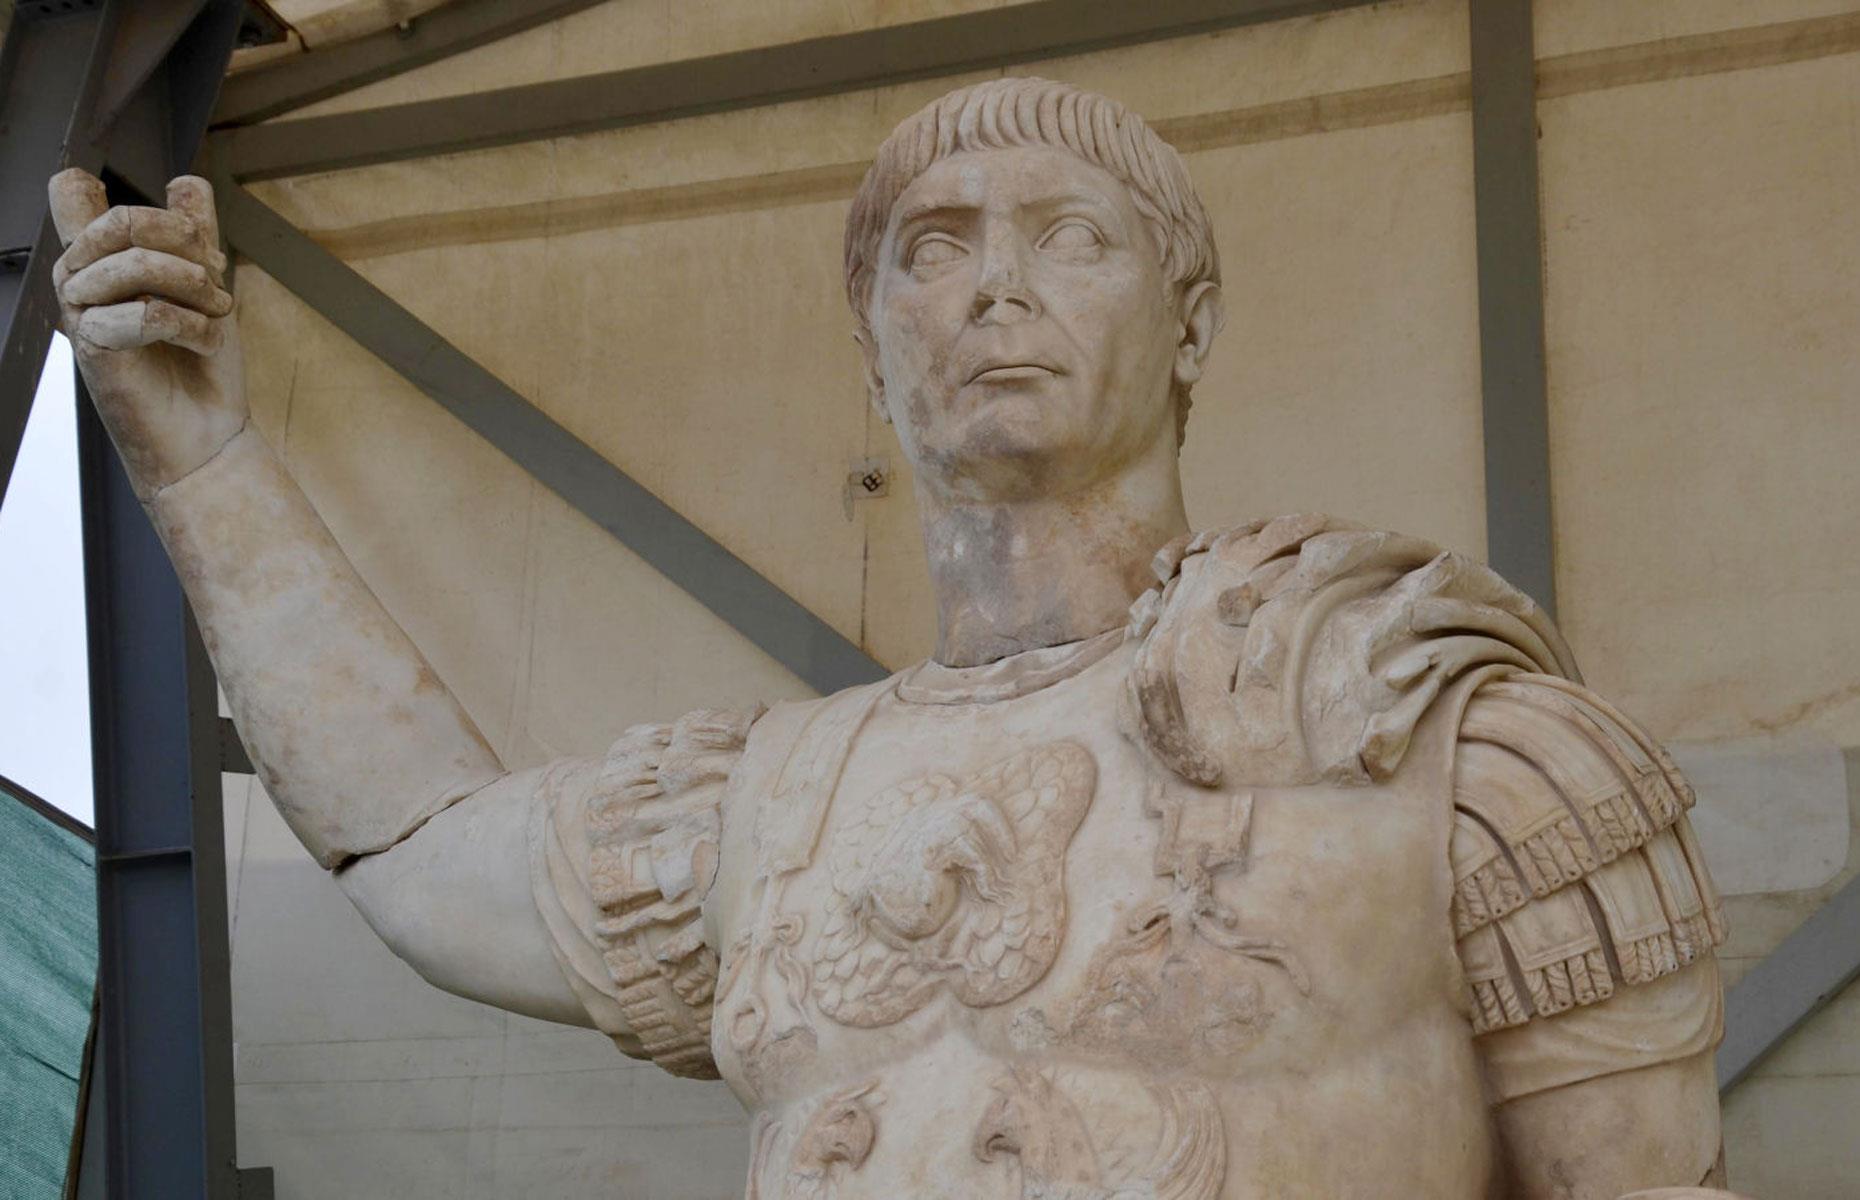 The 10-foot statue of Emperor Trajan